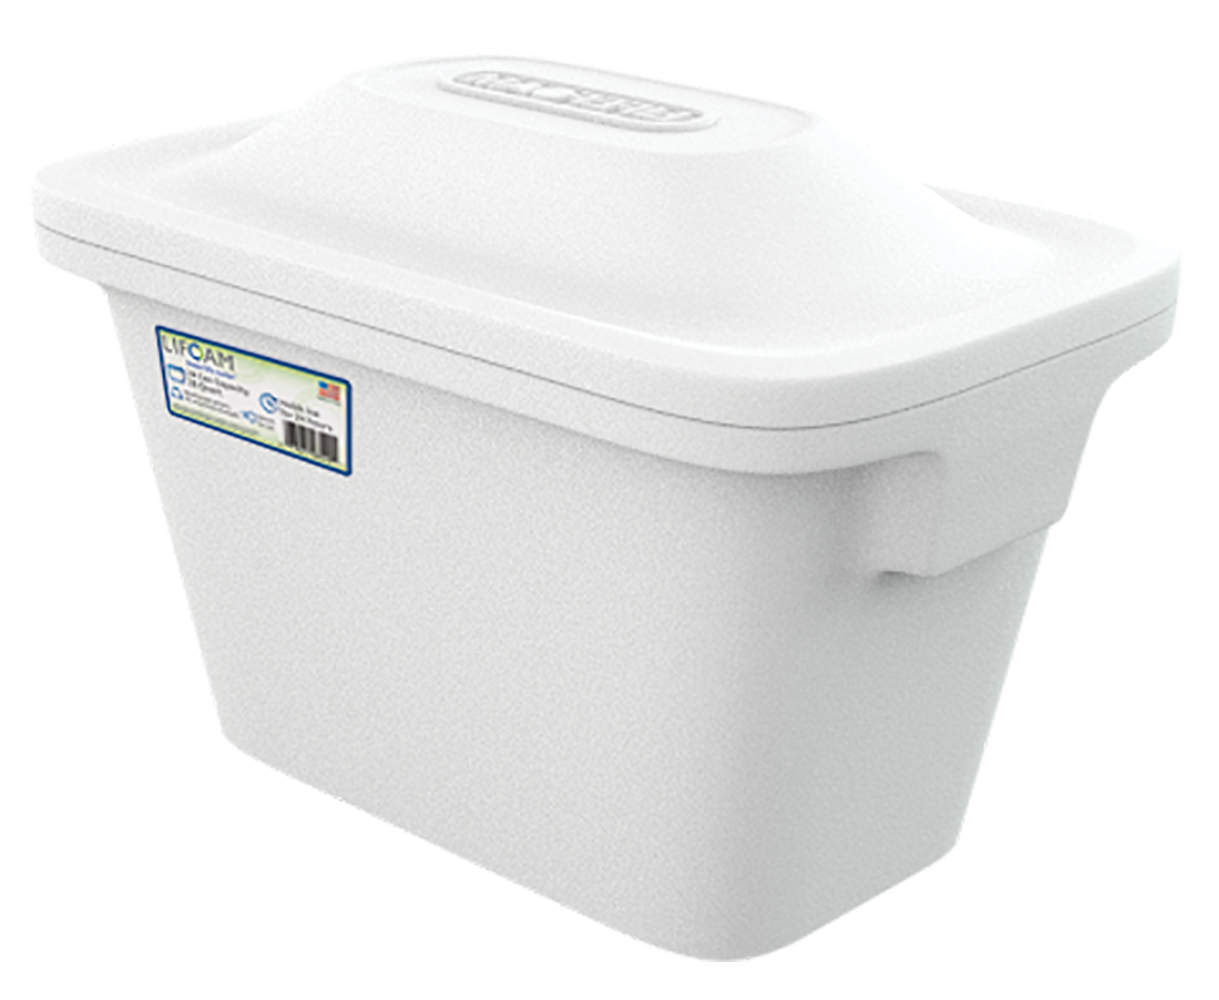 Cooler, Styrofoam 19 x 12.175 x 12.5 - 555136-19